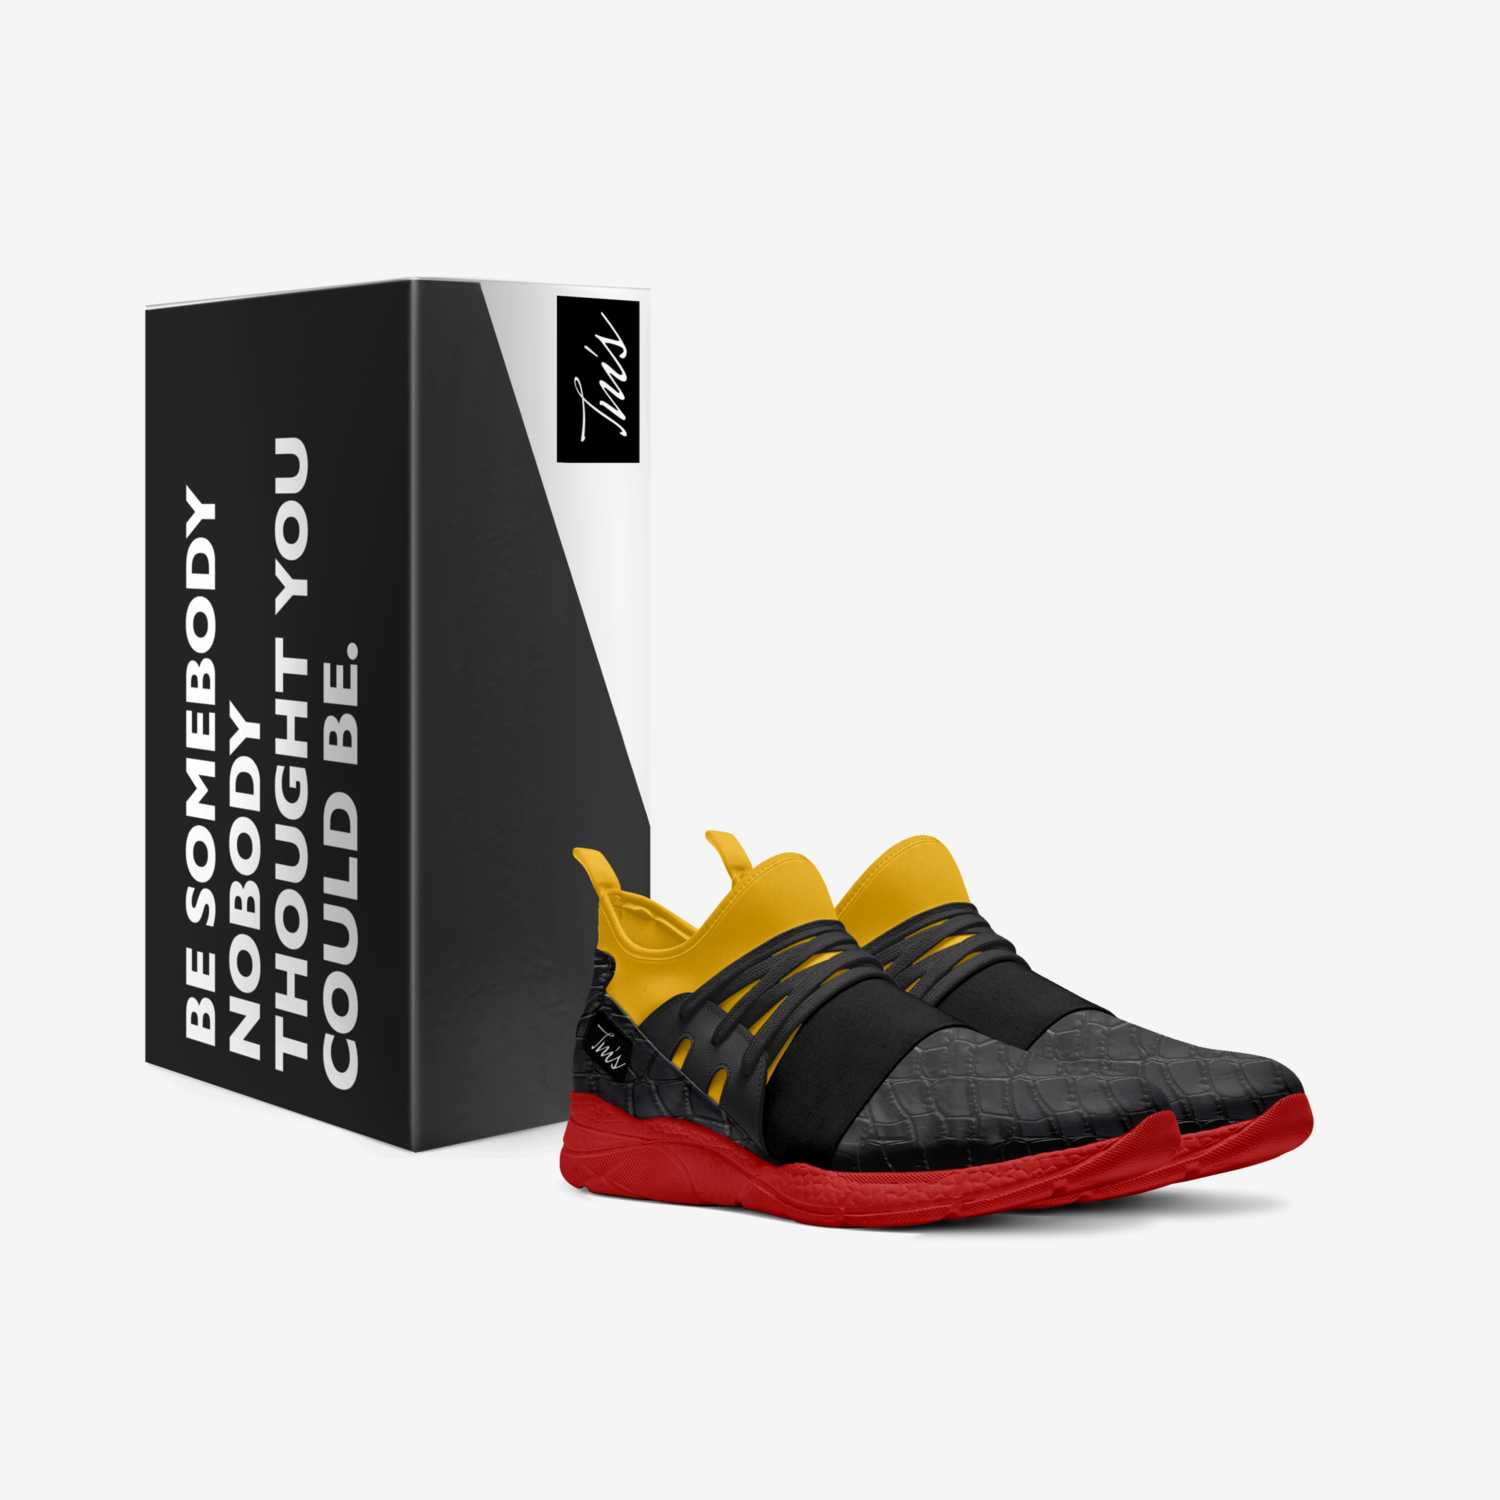 TM's custom made in Italy shoes by Mheelin Cummins | Box view